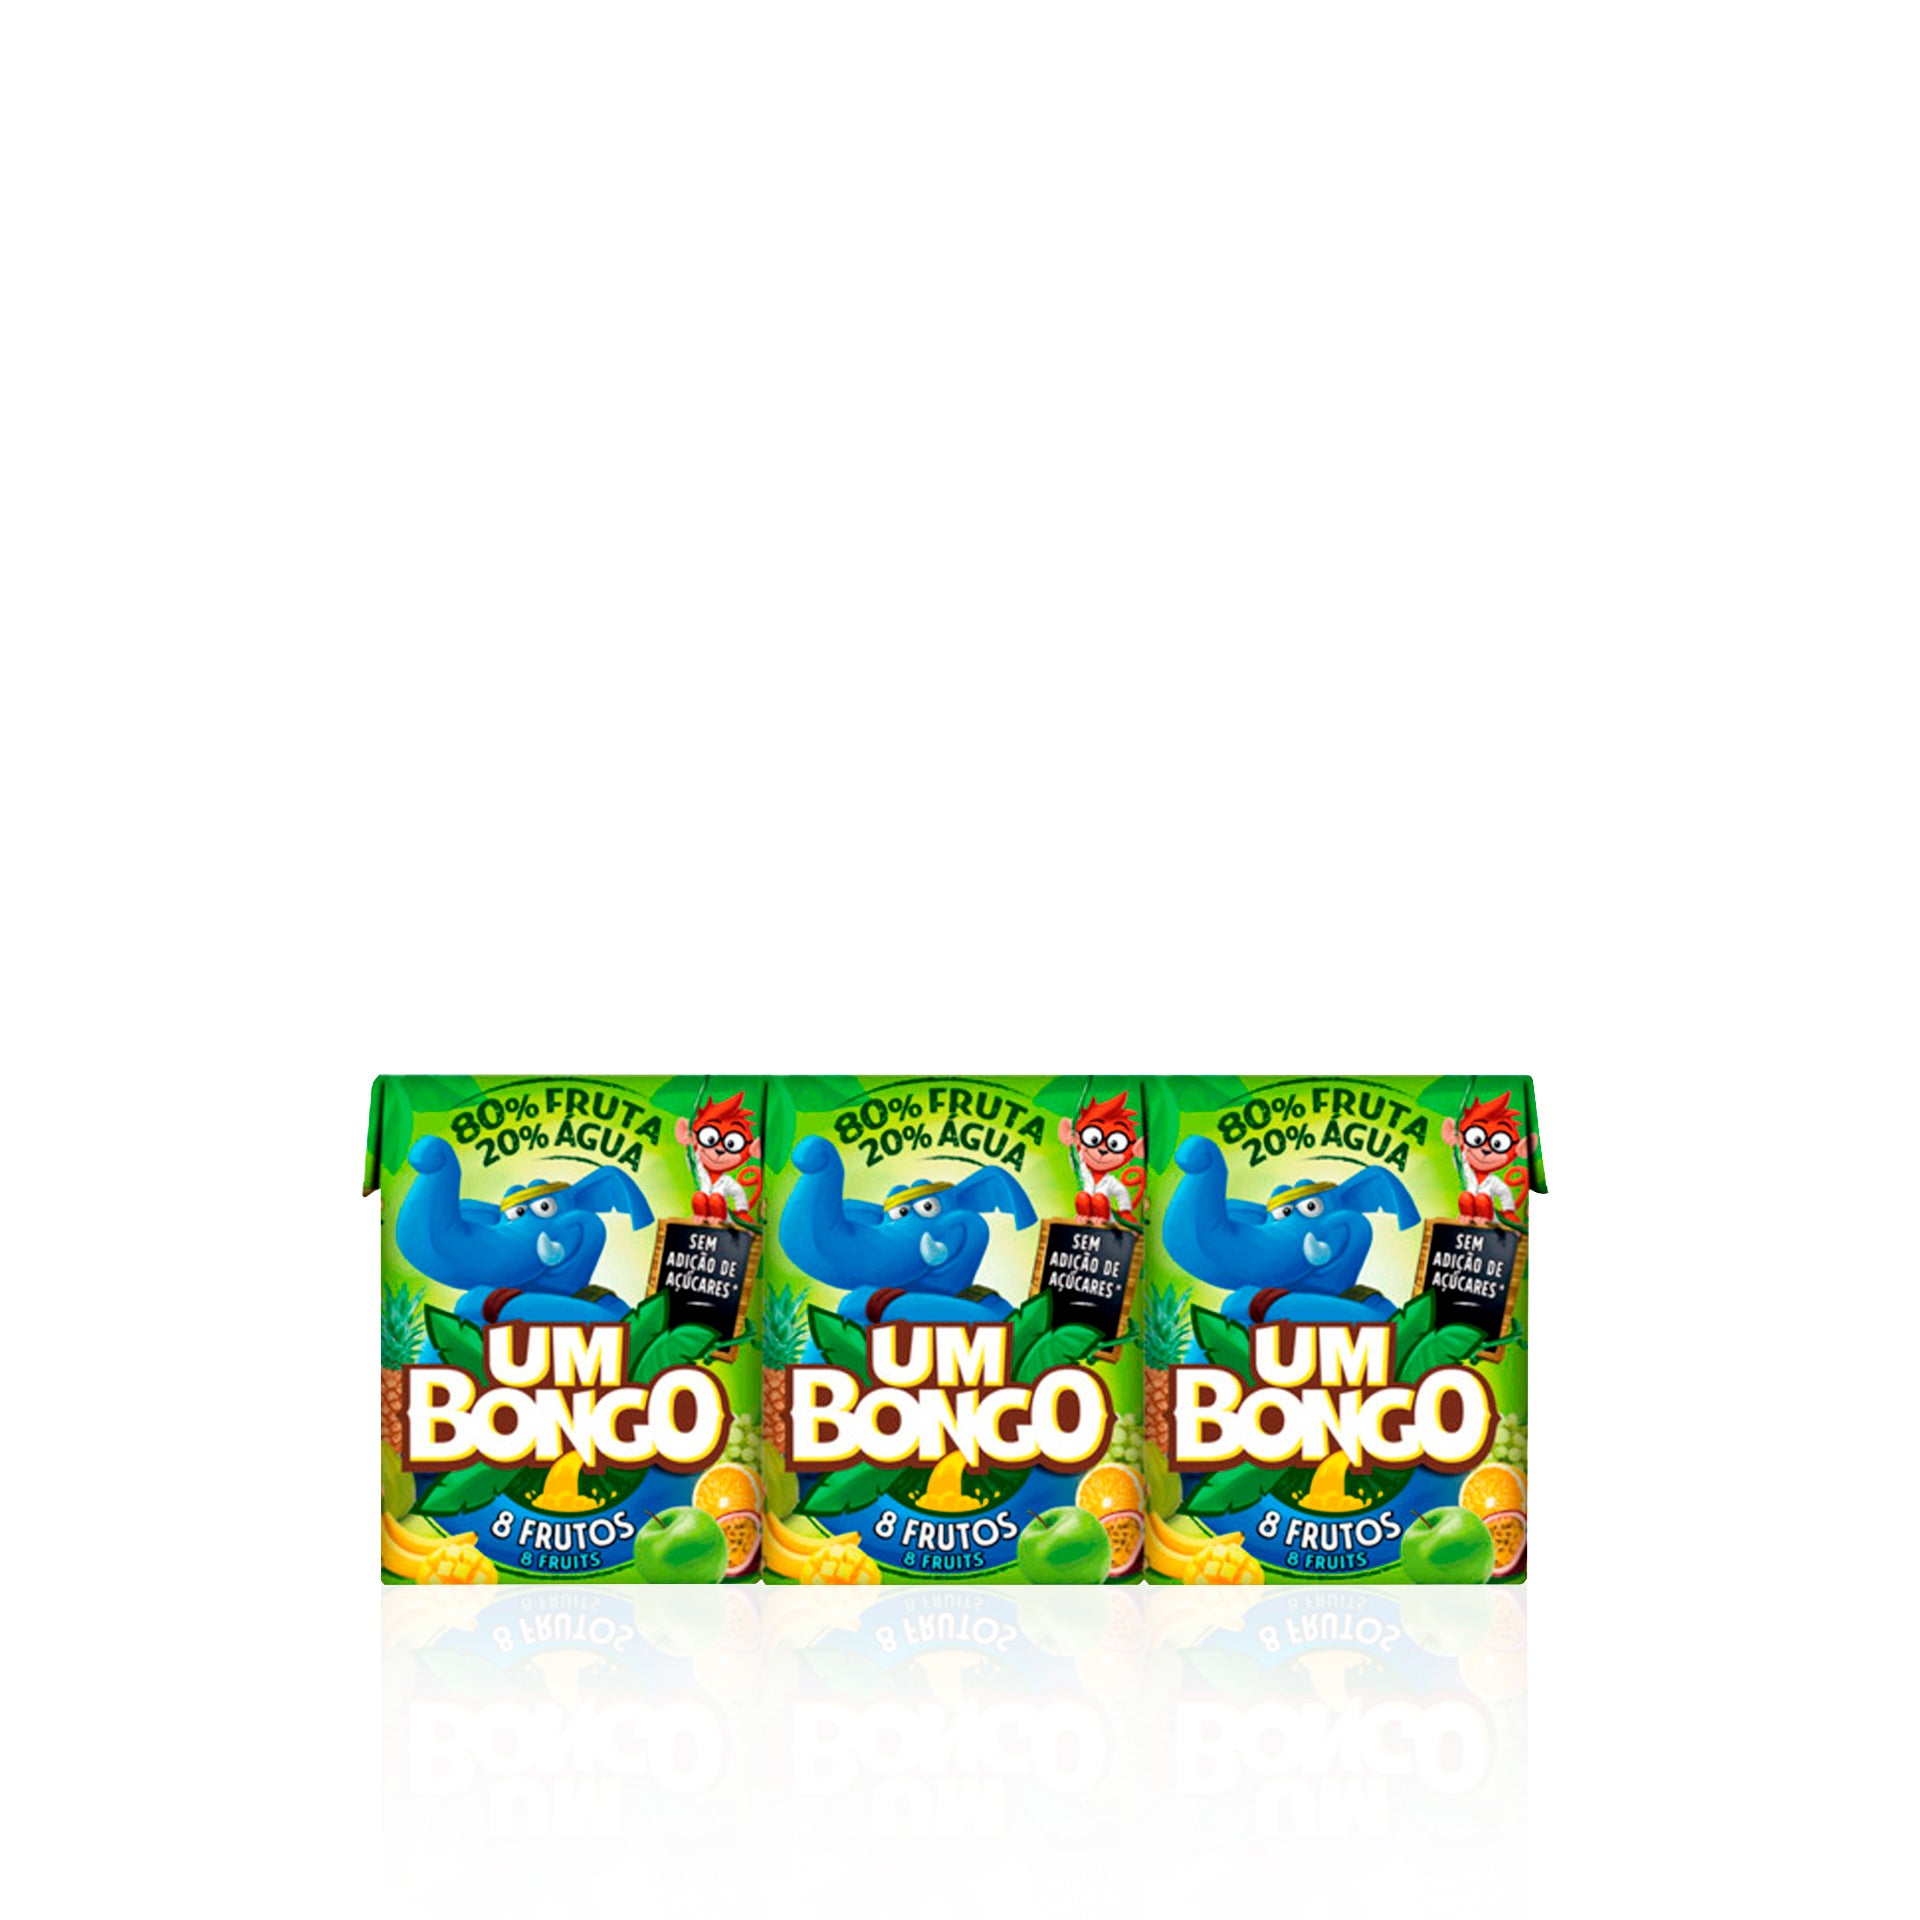 Um Bongo Néctar 8 Frutos - Pack 3 x 20 cl